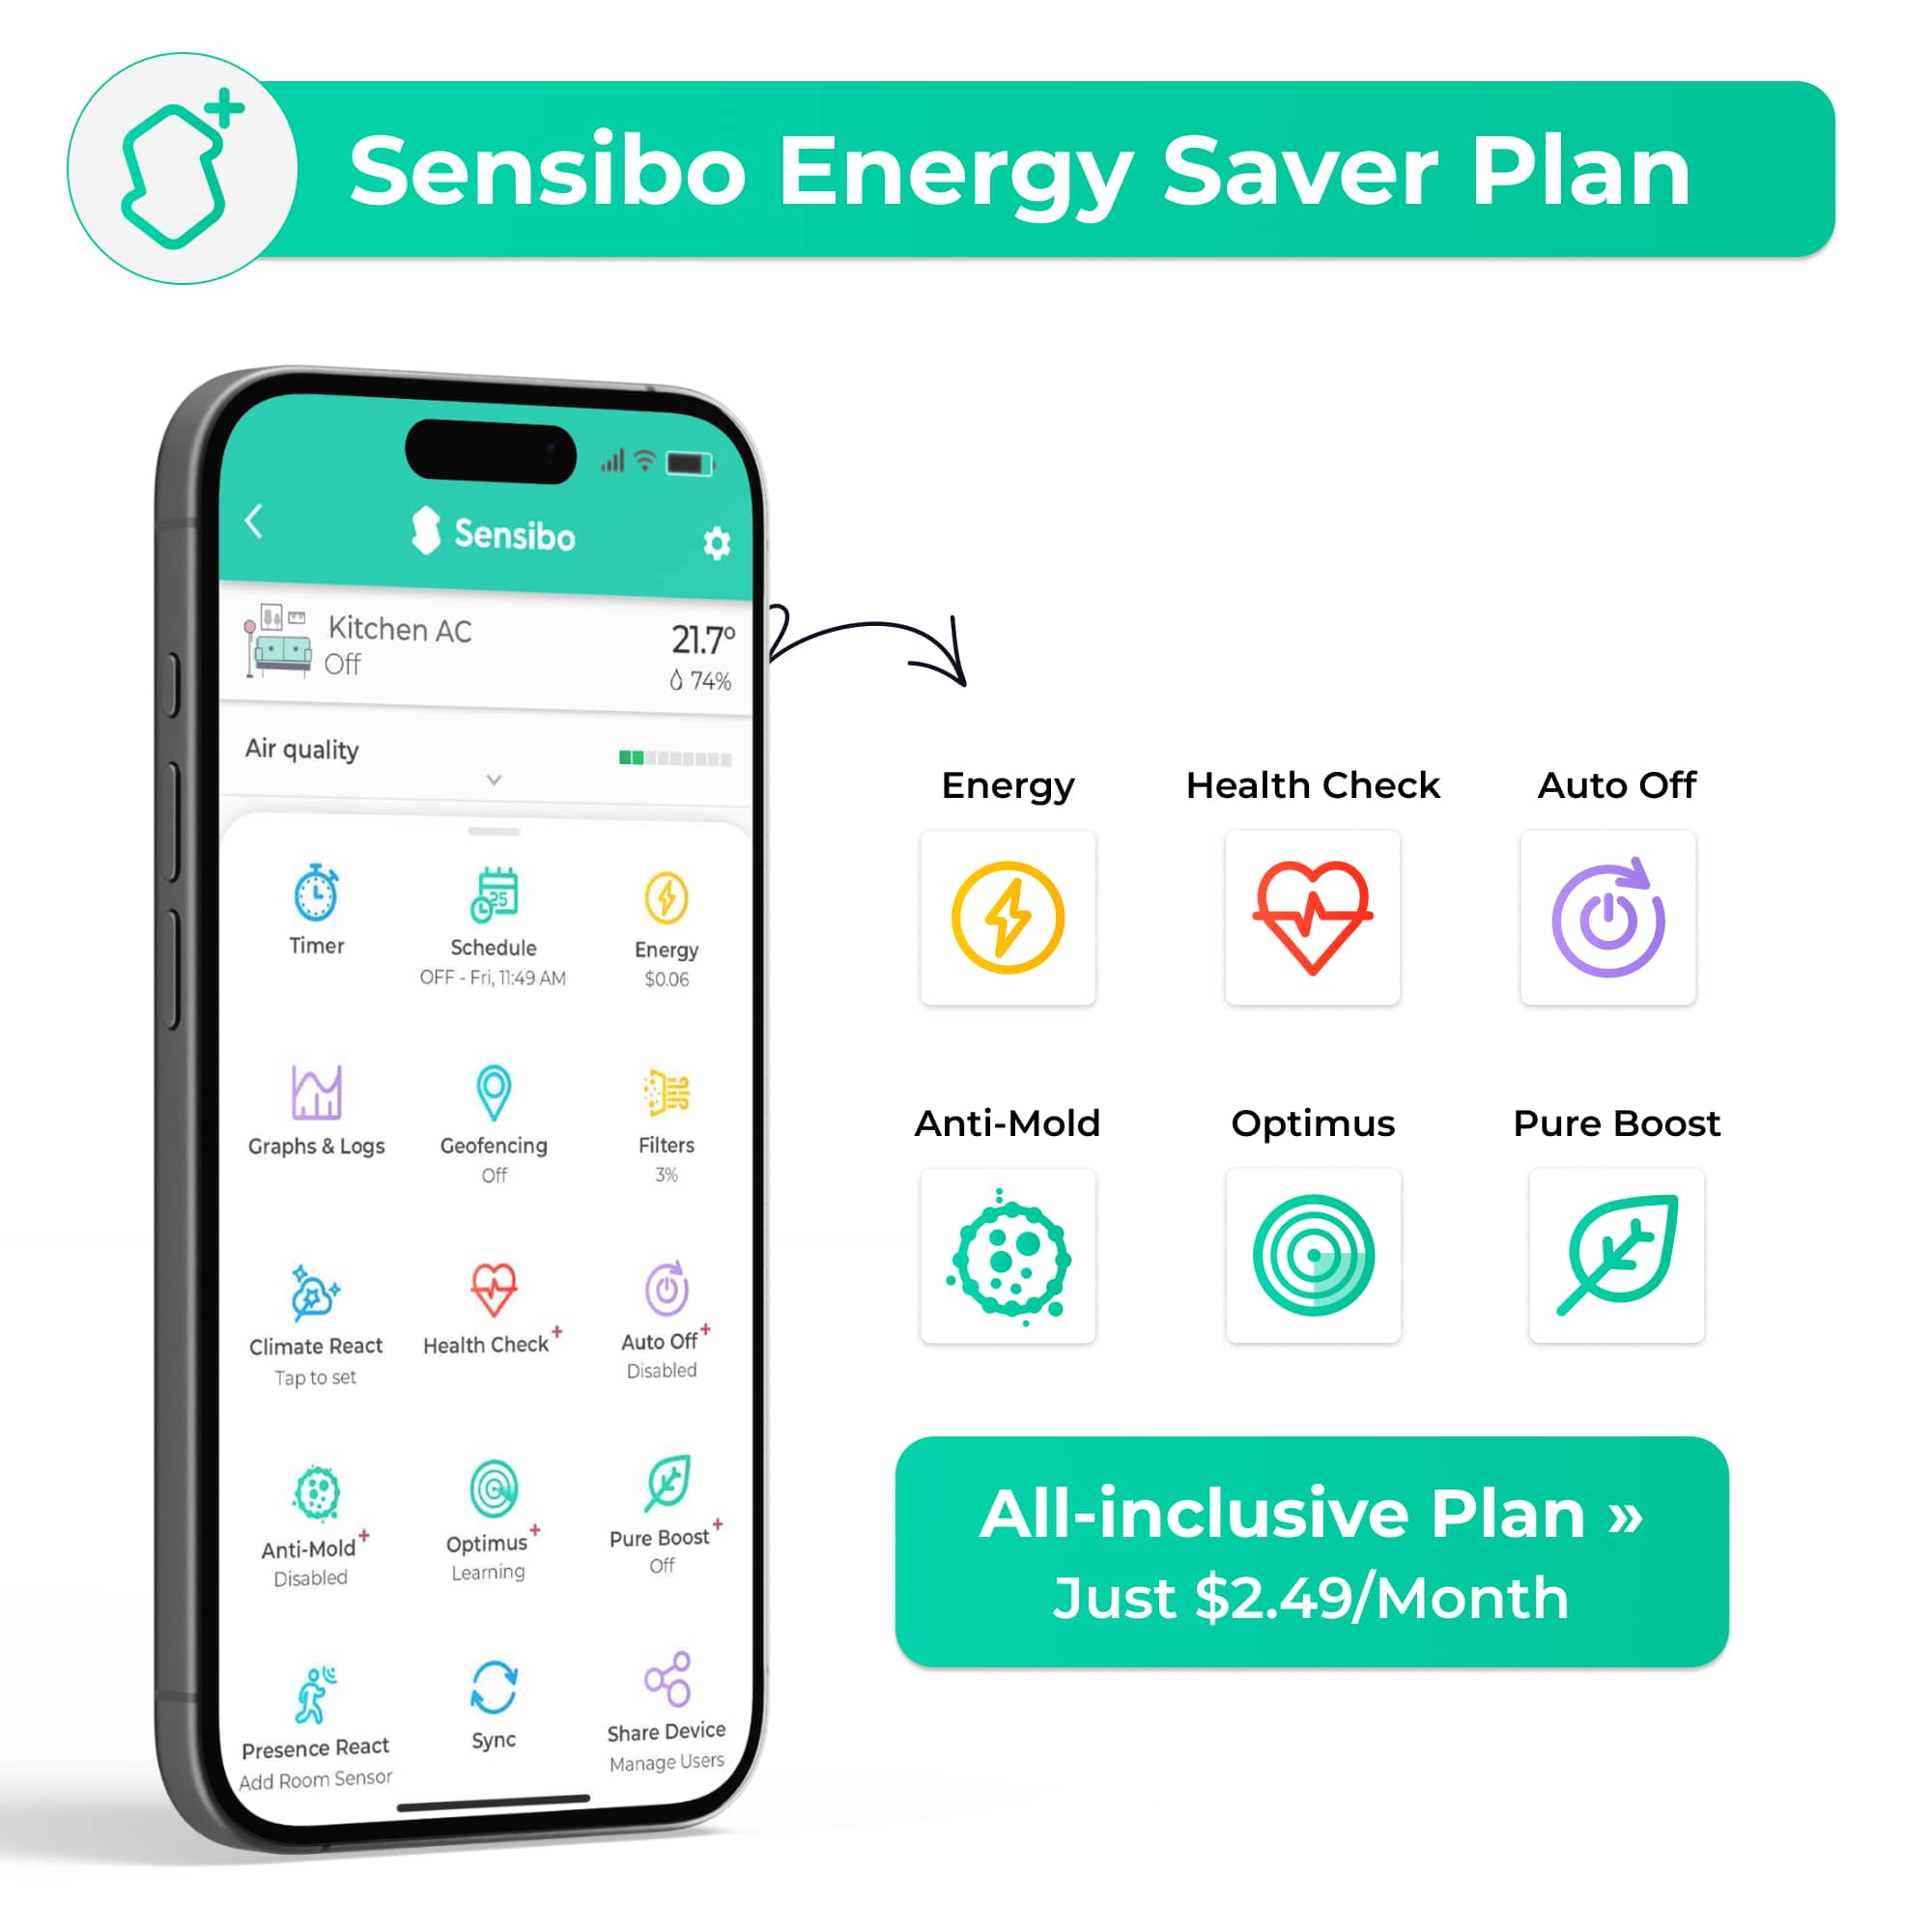 Sensibo Energy Saver Plan